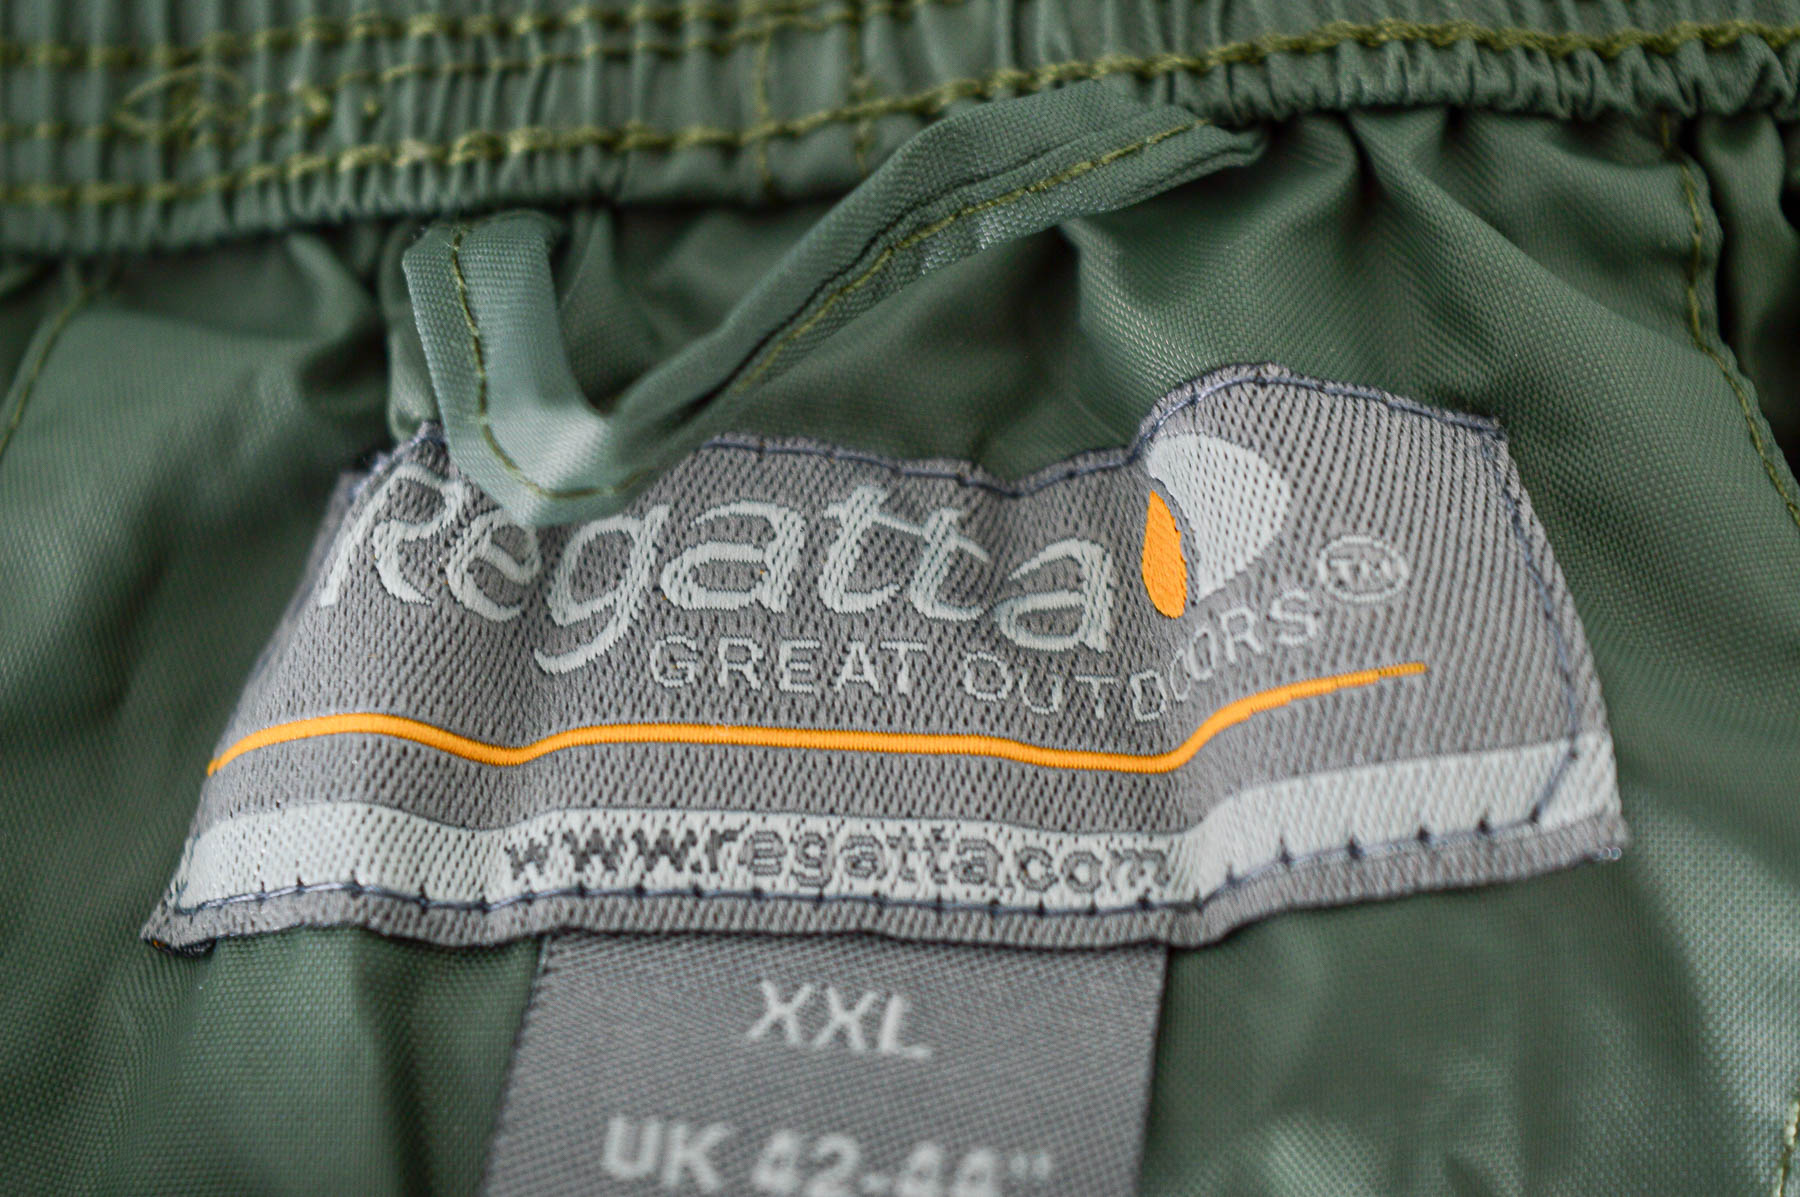 Men's trousers - Regatta - 2